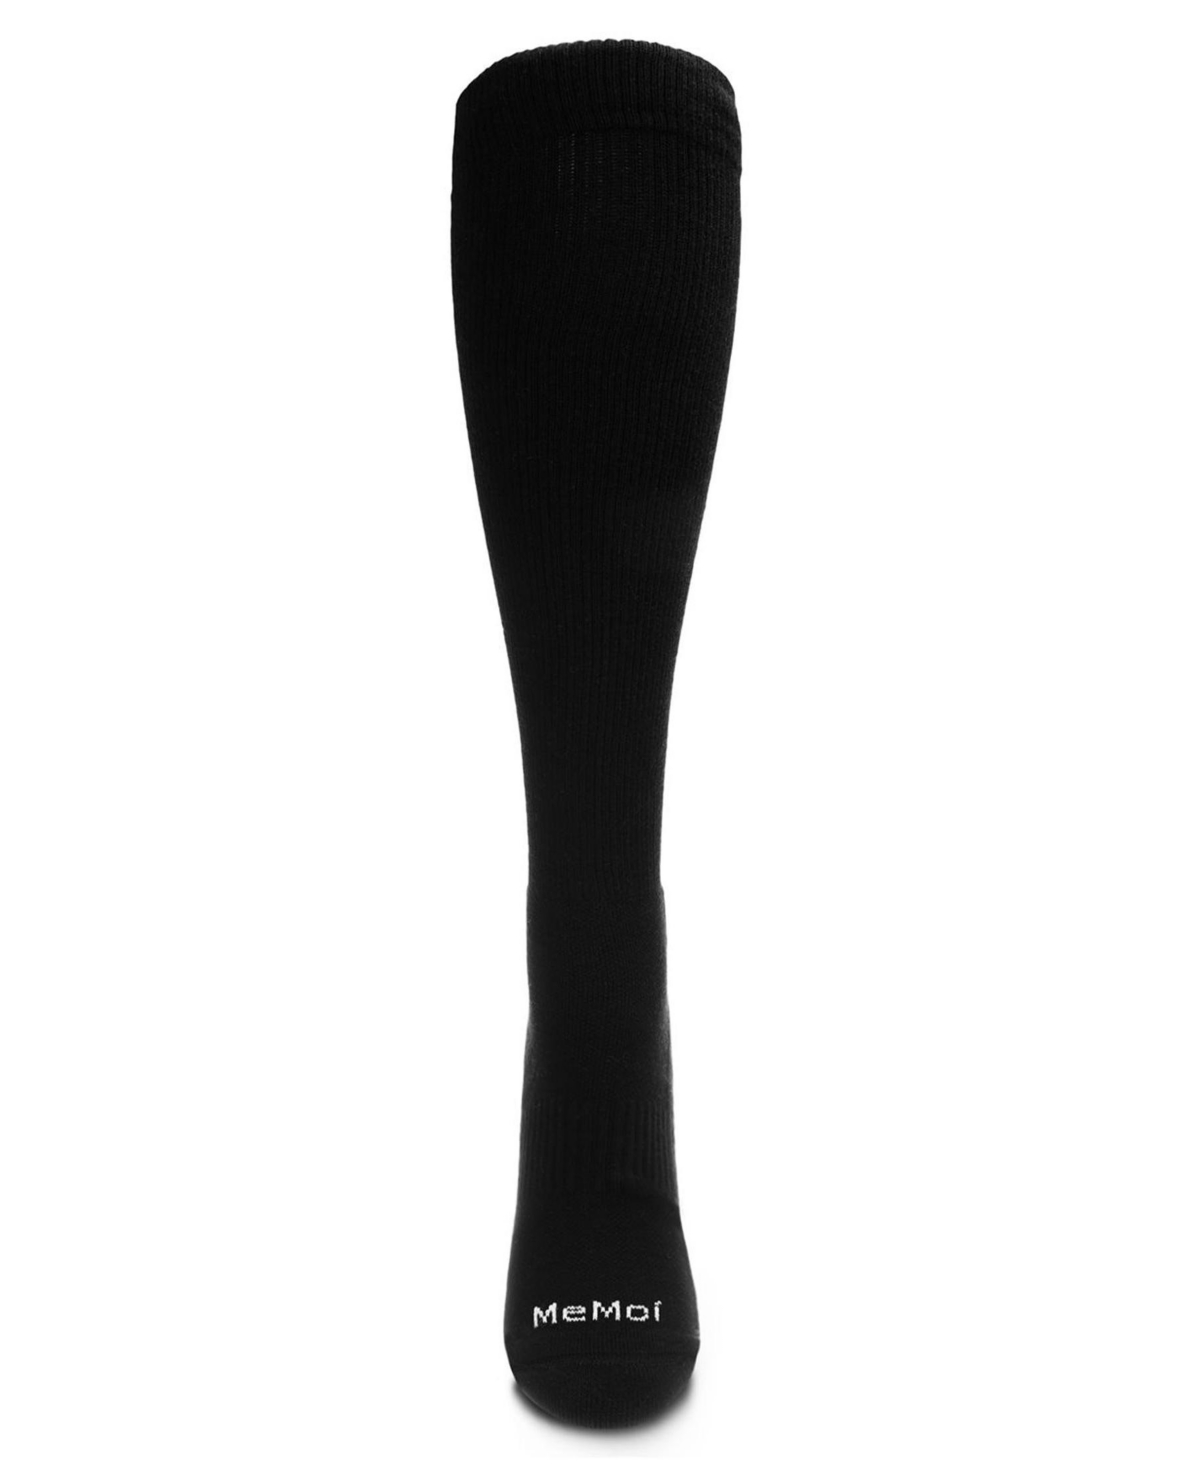 Shop Memoi Unisex Classic Athletic Cushion Sole Knee High Cotton Blend 15-20mmhg Graduated Compression Socks In White